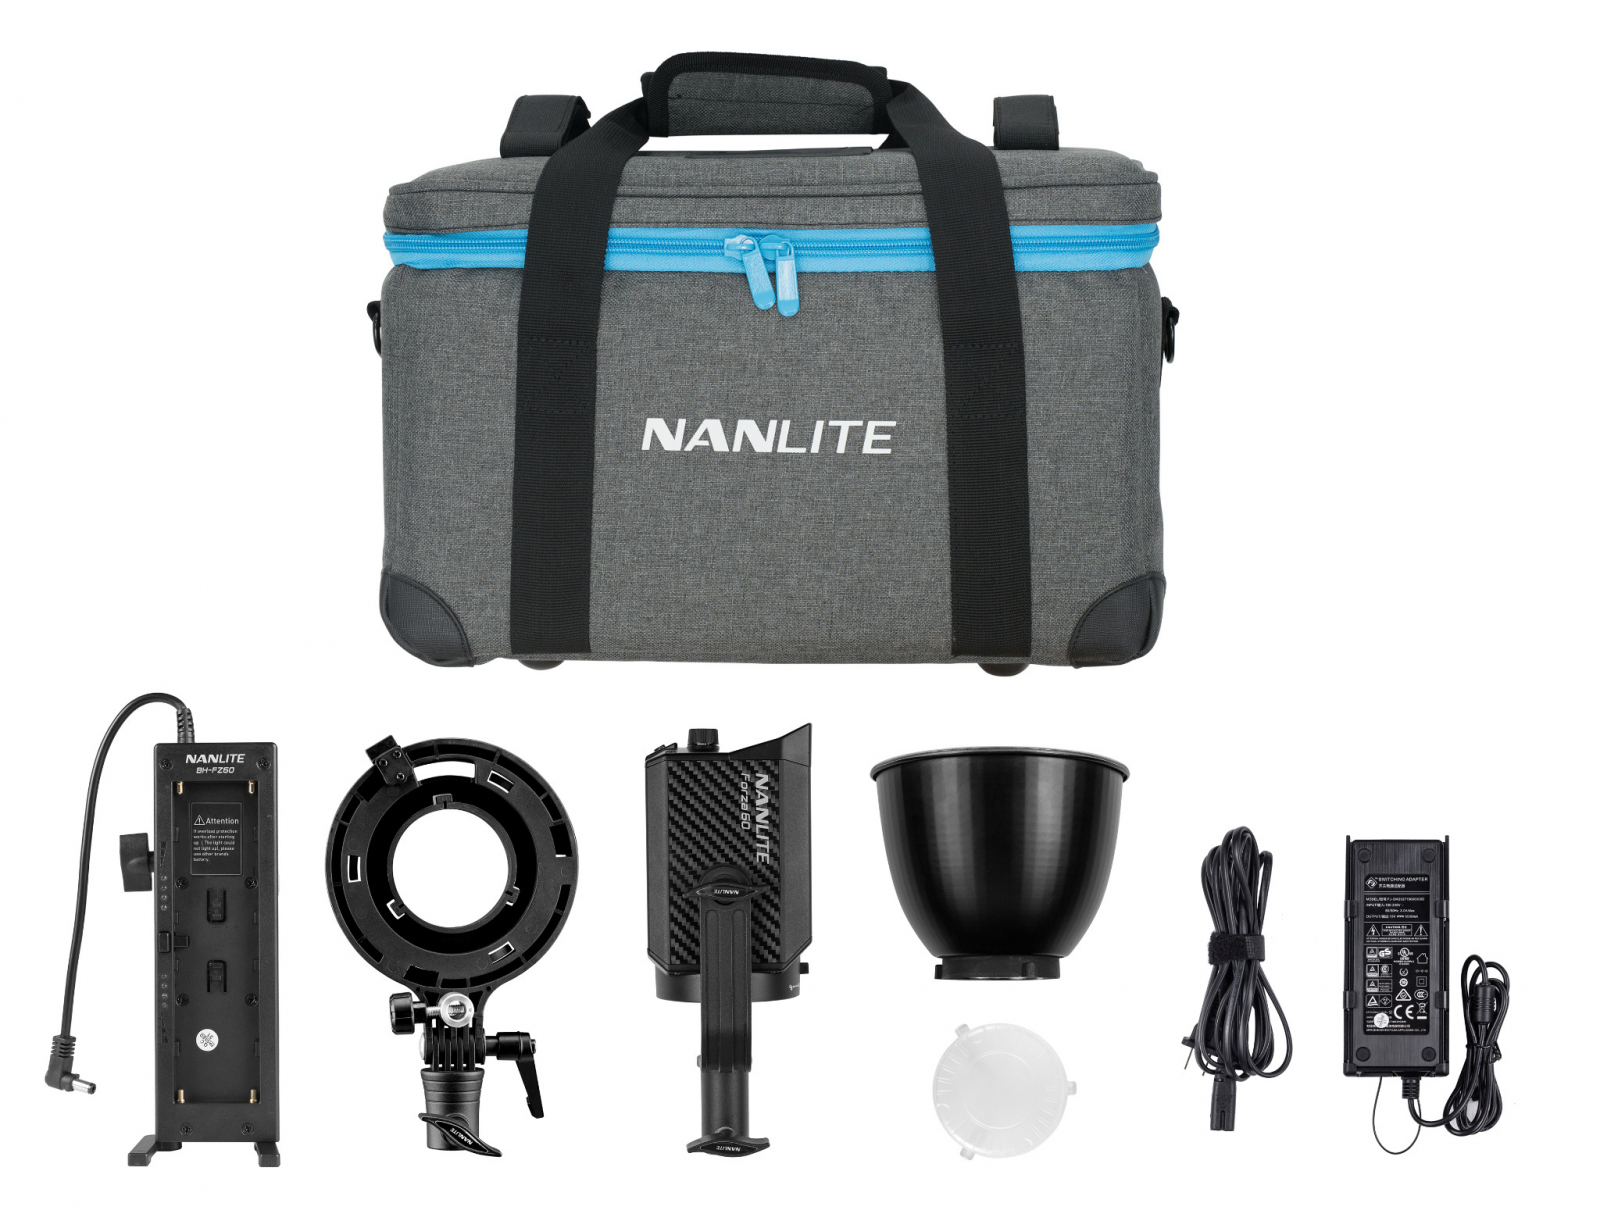 KAISER NANLITE Forza 60 LED Kit inkl. Akku-Handgriff und Bowens Adapter